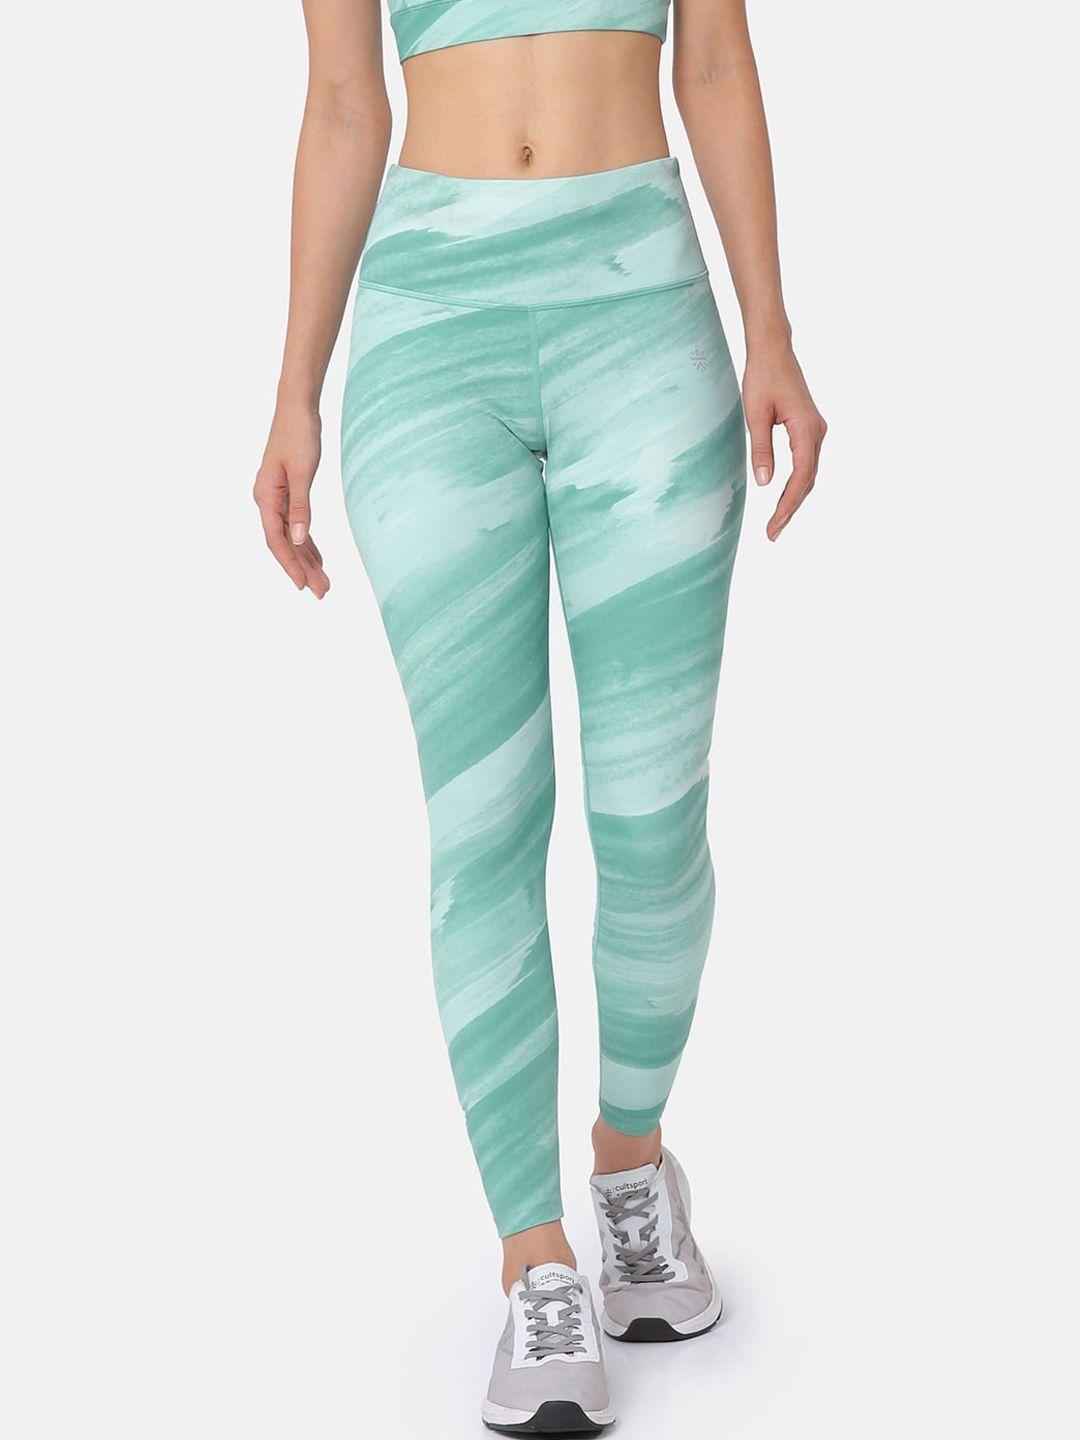 cultsport women green & white printed high waist tights